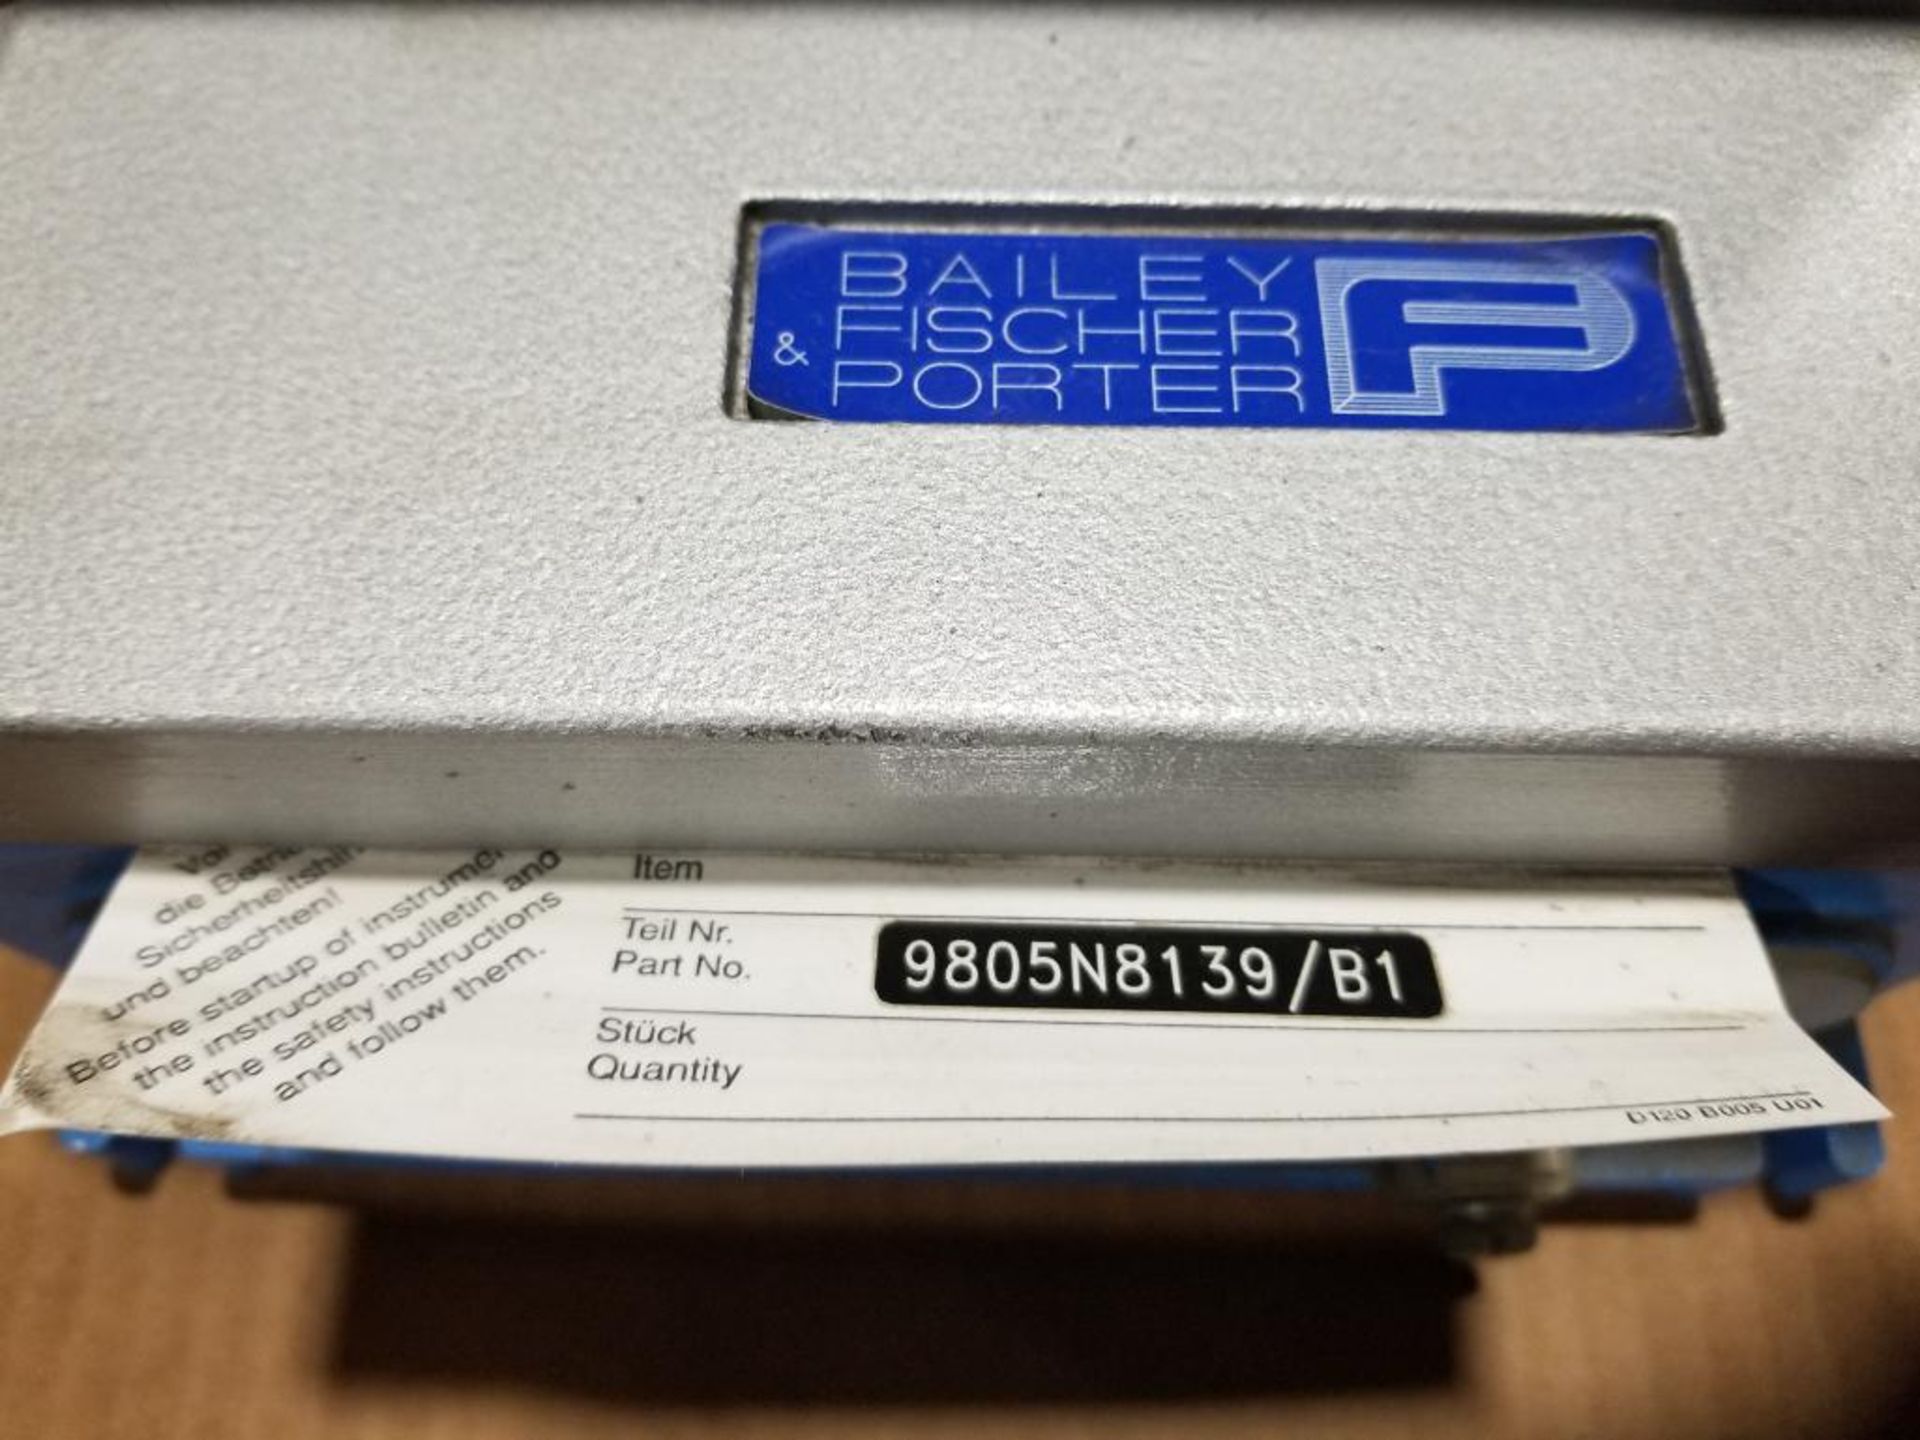 Bailey Fischer & Porter control. Part number 9805N8139/B1. - Image 3 of 6